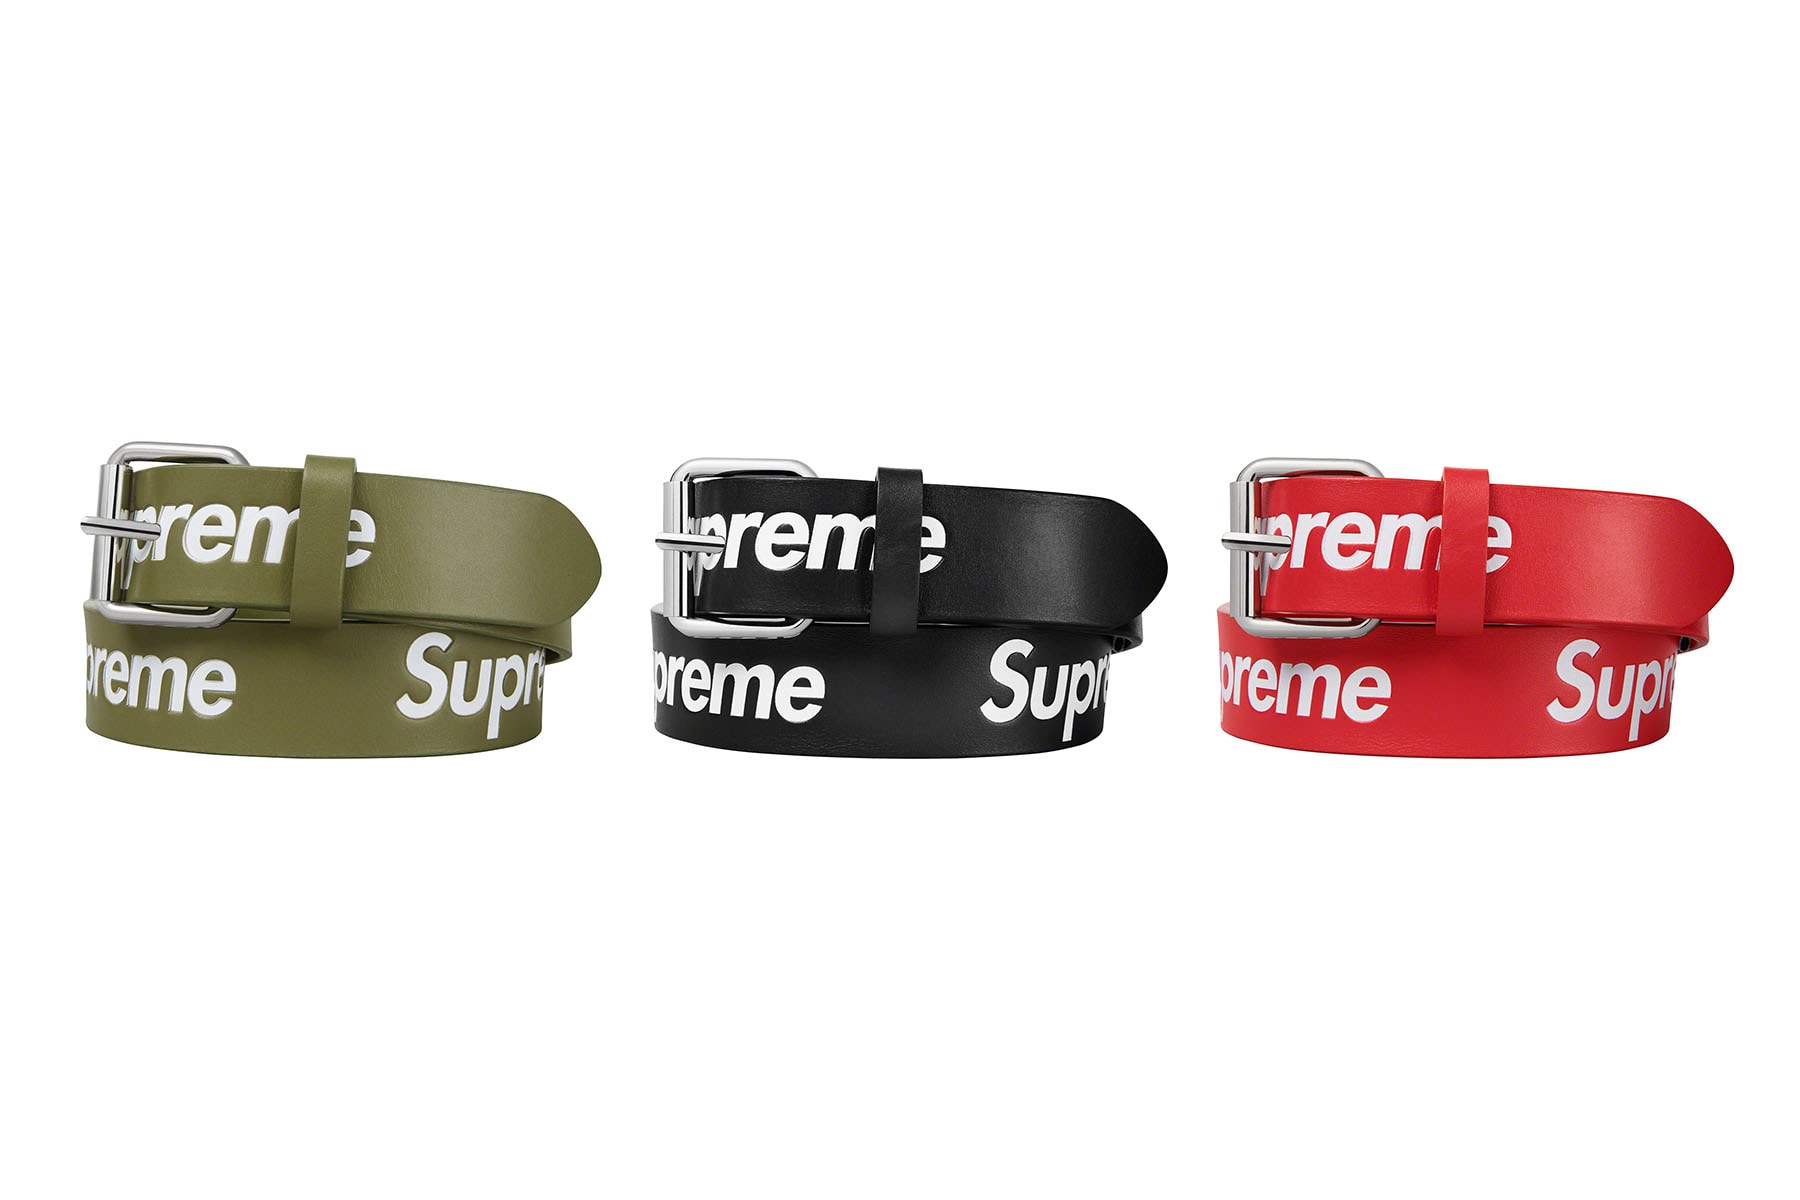 Supreme 全新 2022 春夏帽款、包款與配件系列一覽